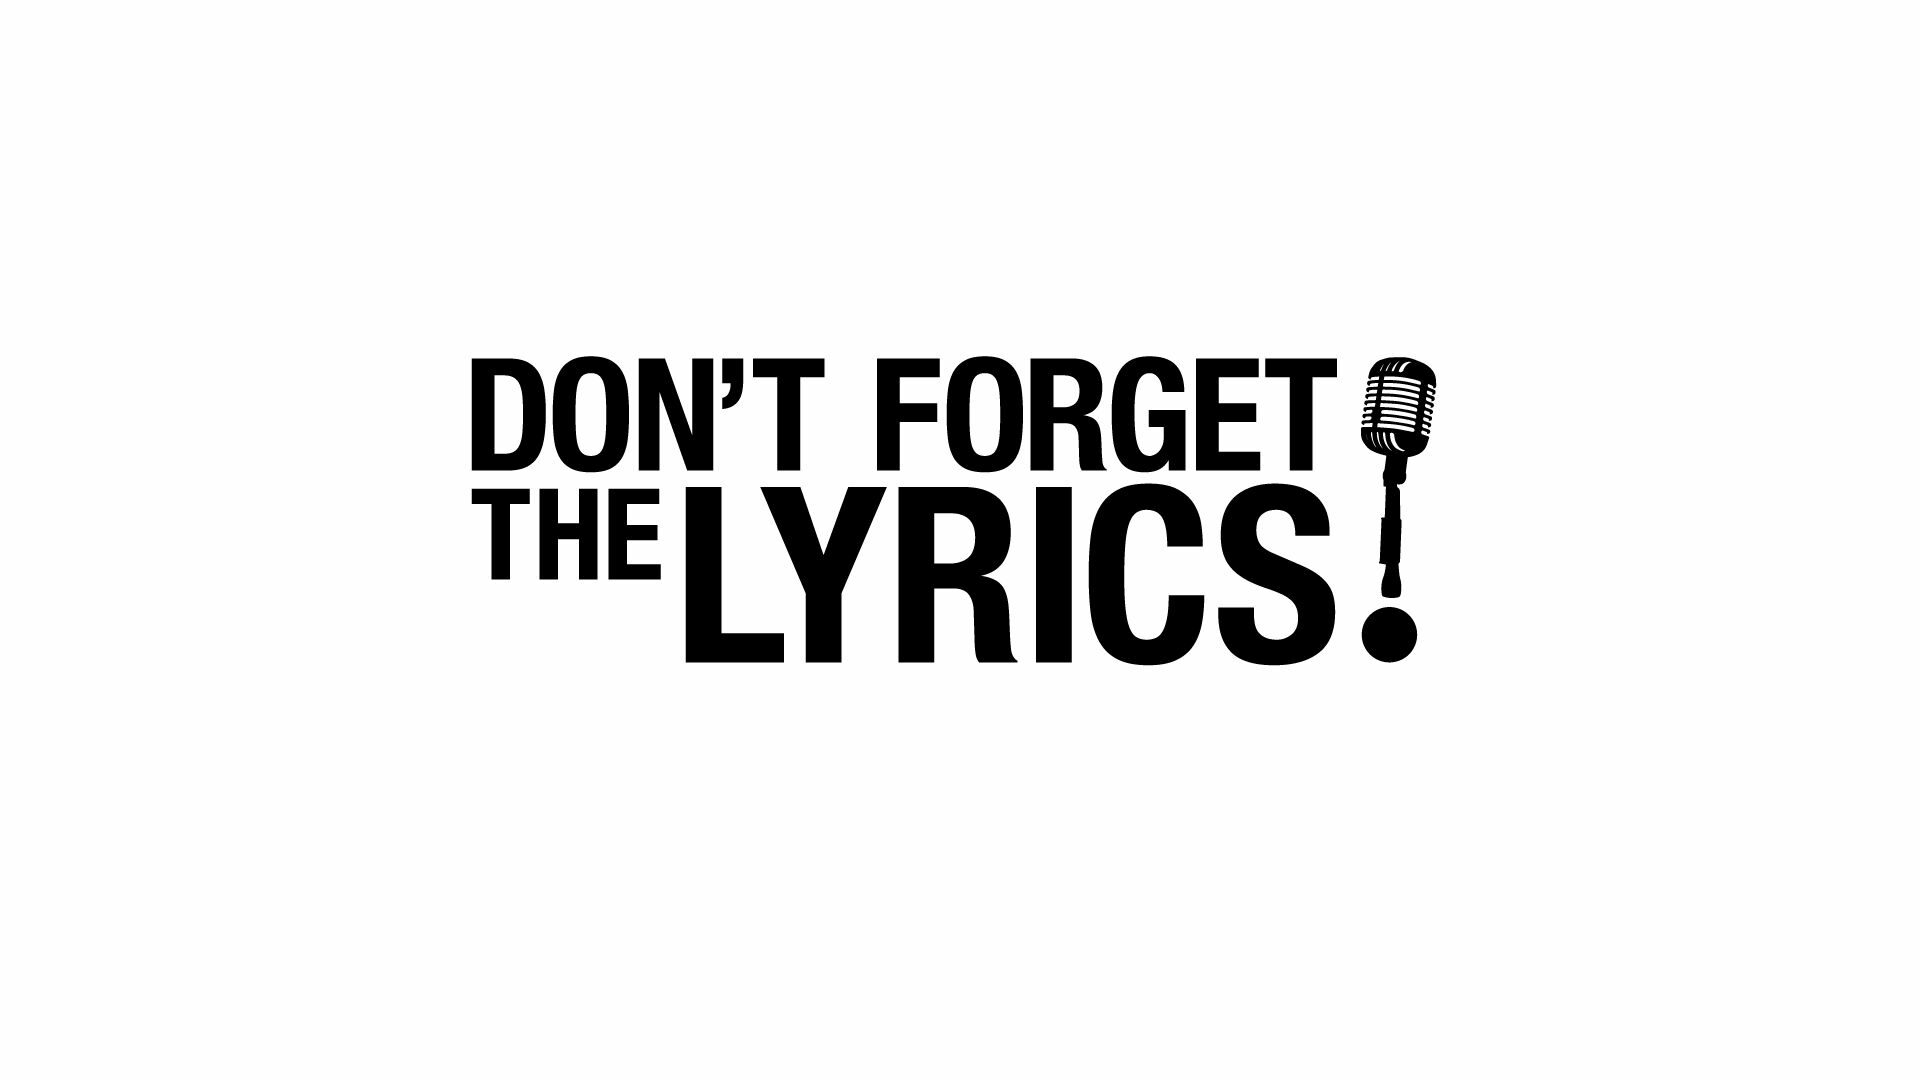 Don't Forget the Lyrics!